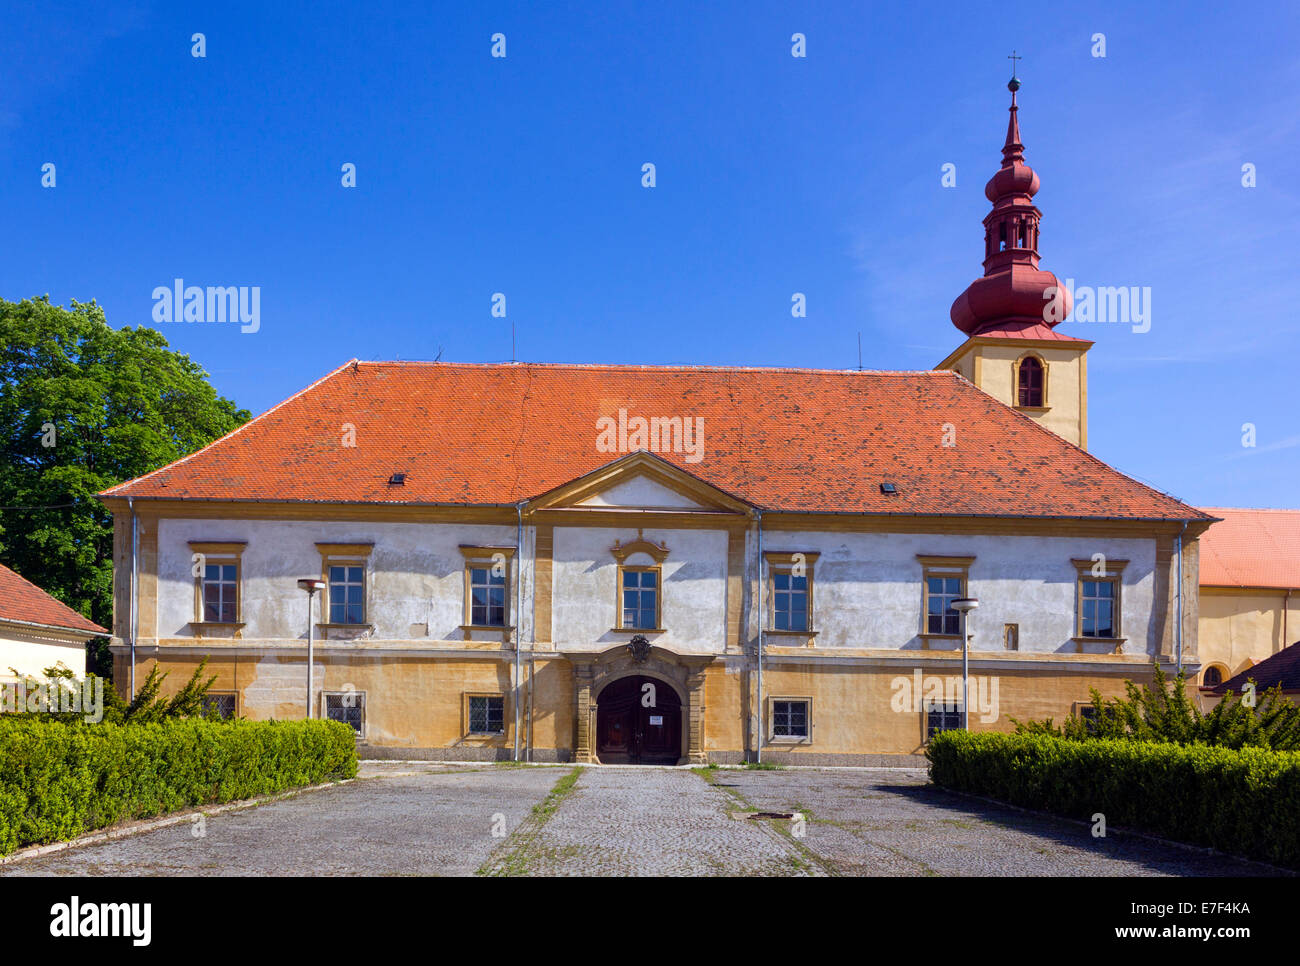 Chateau, Dalesice, Trebic district, Vysocina region, Czech Republic Stock Photo